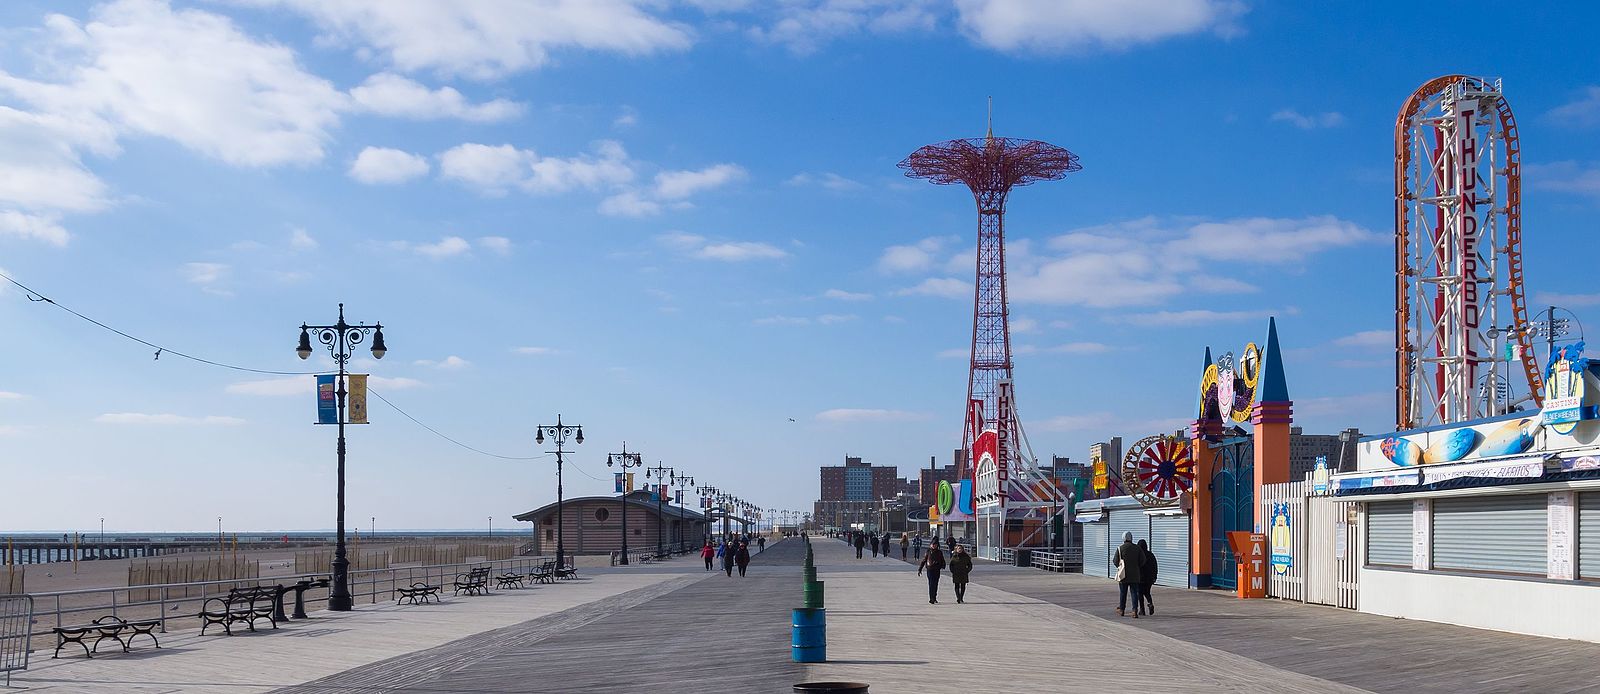 Coney Island Boardwalk Celebrates 95th Year Anniversary With Landmark Preservation